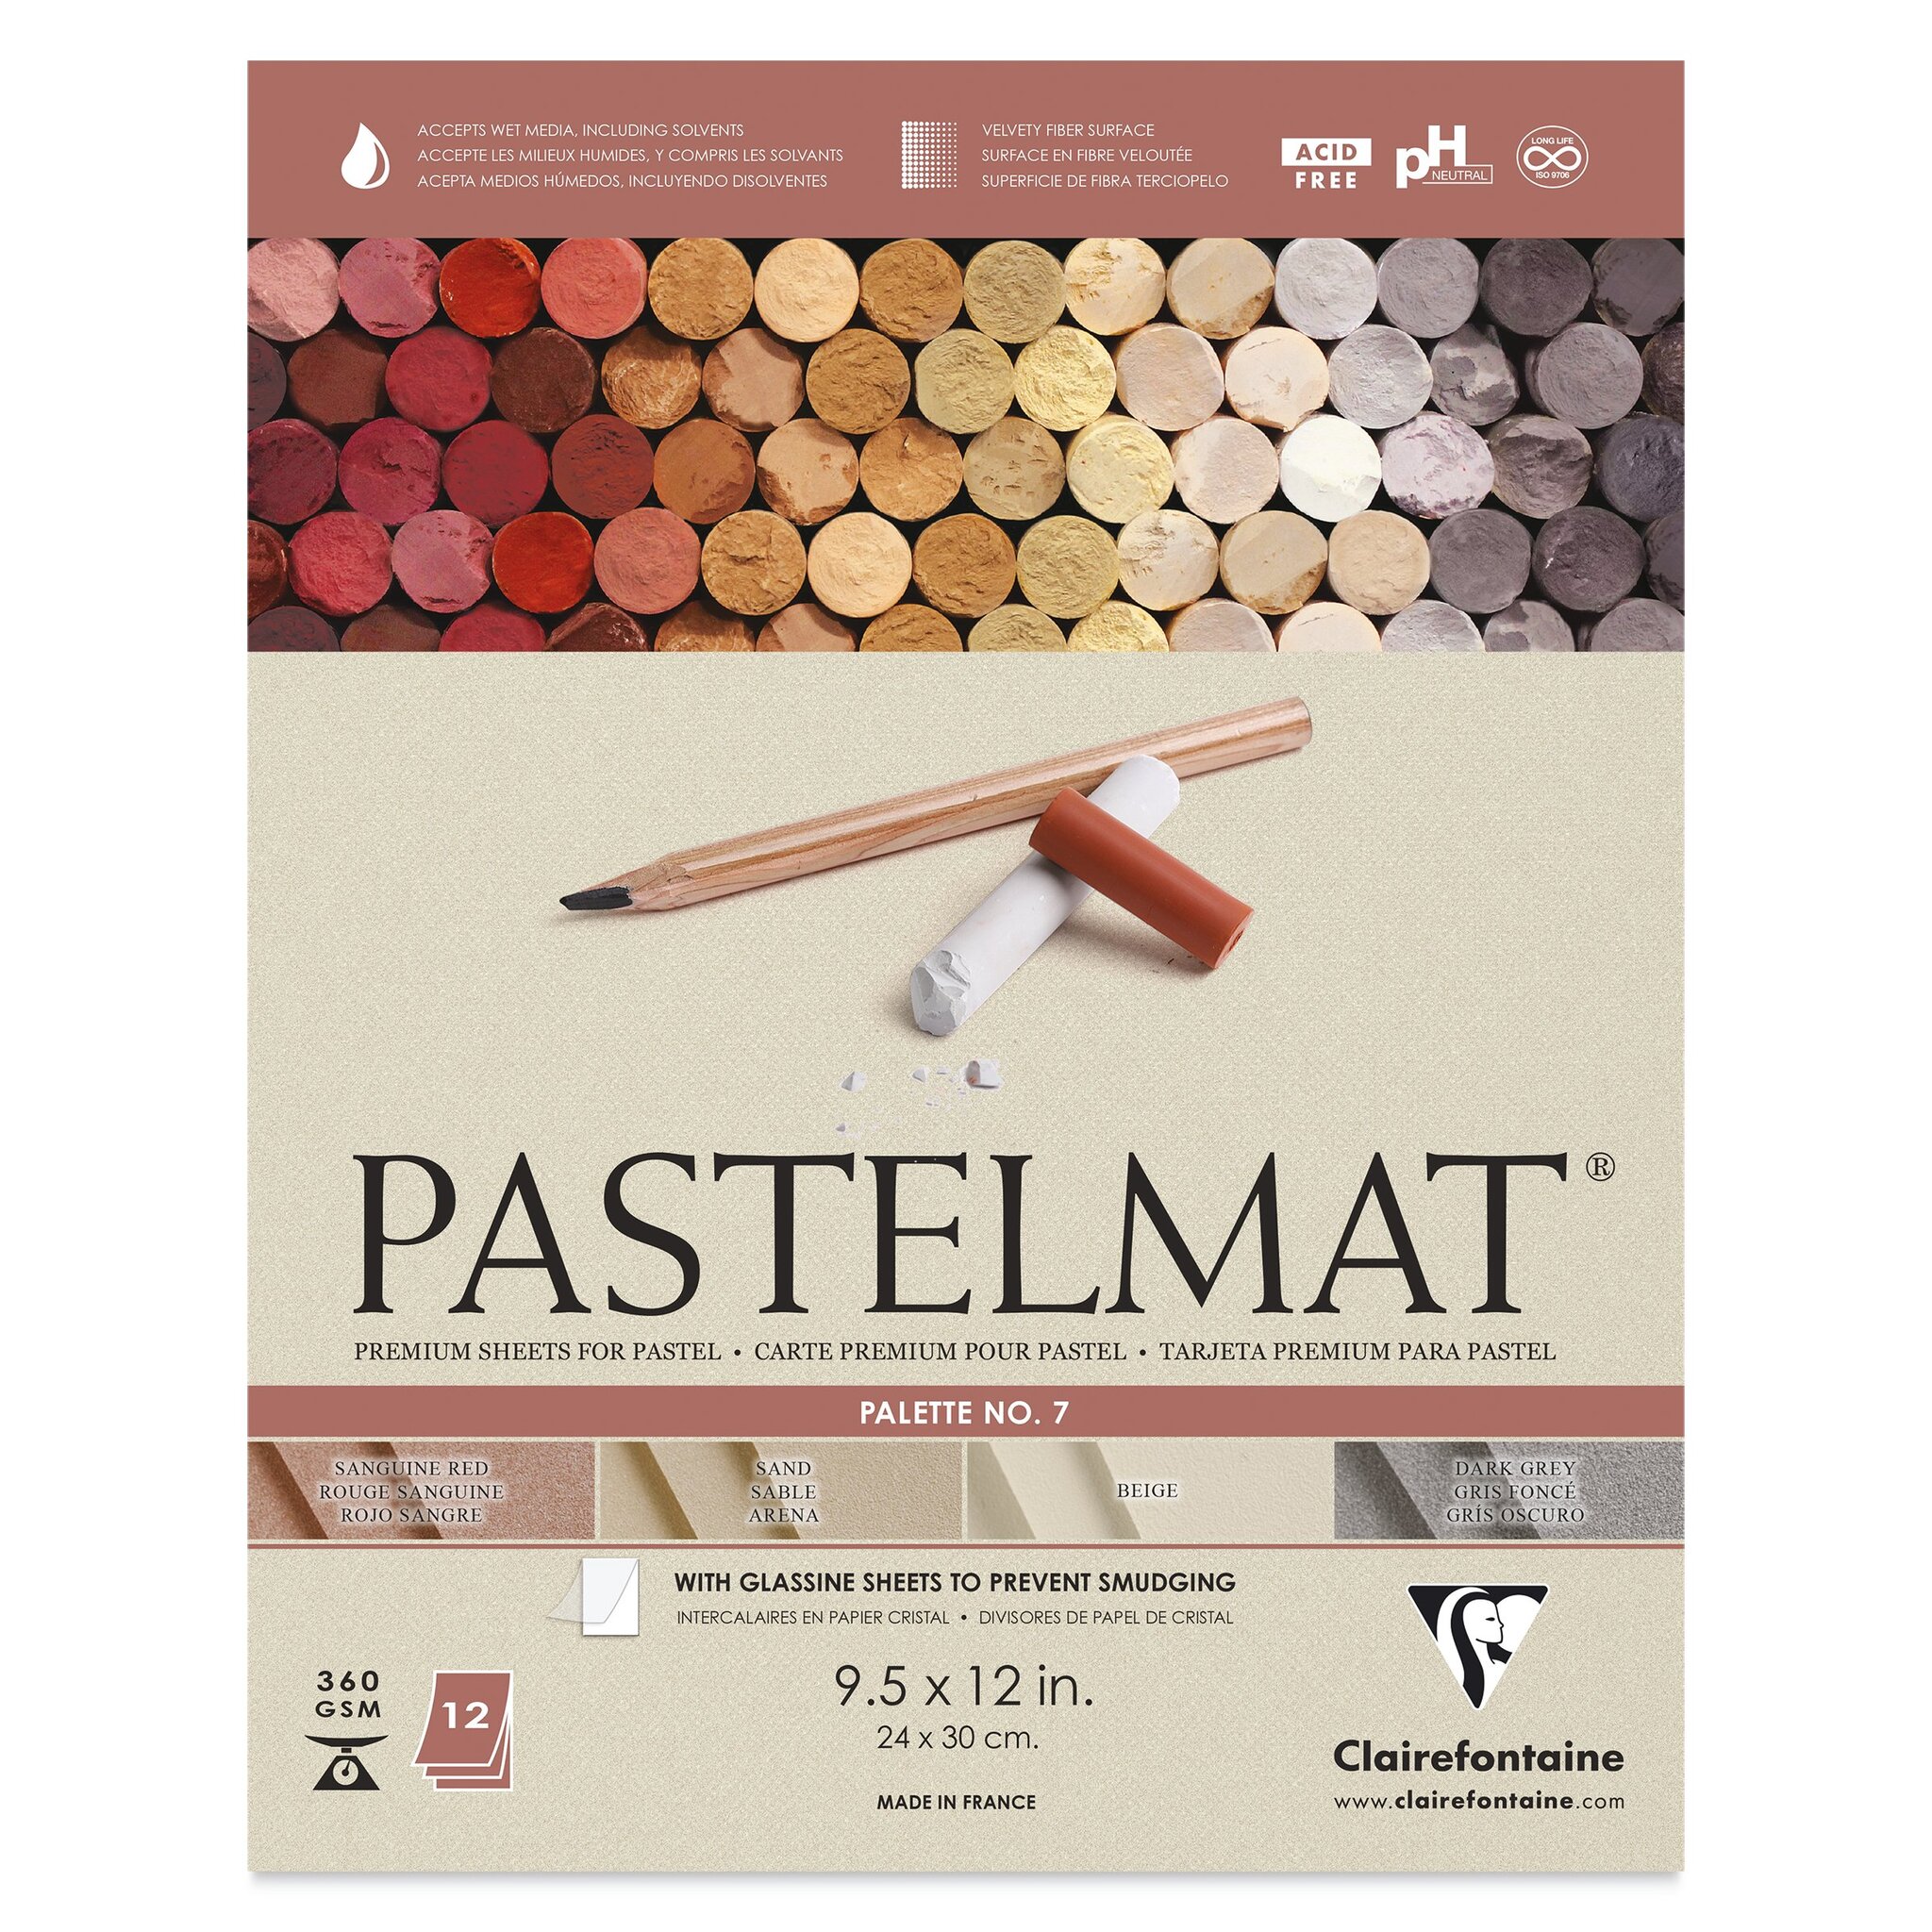 Pastelmat Pads: Light Shades 18x24 cm N:ro 1